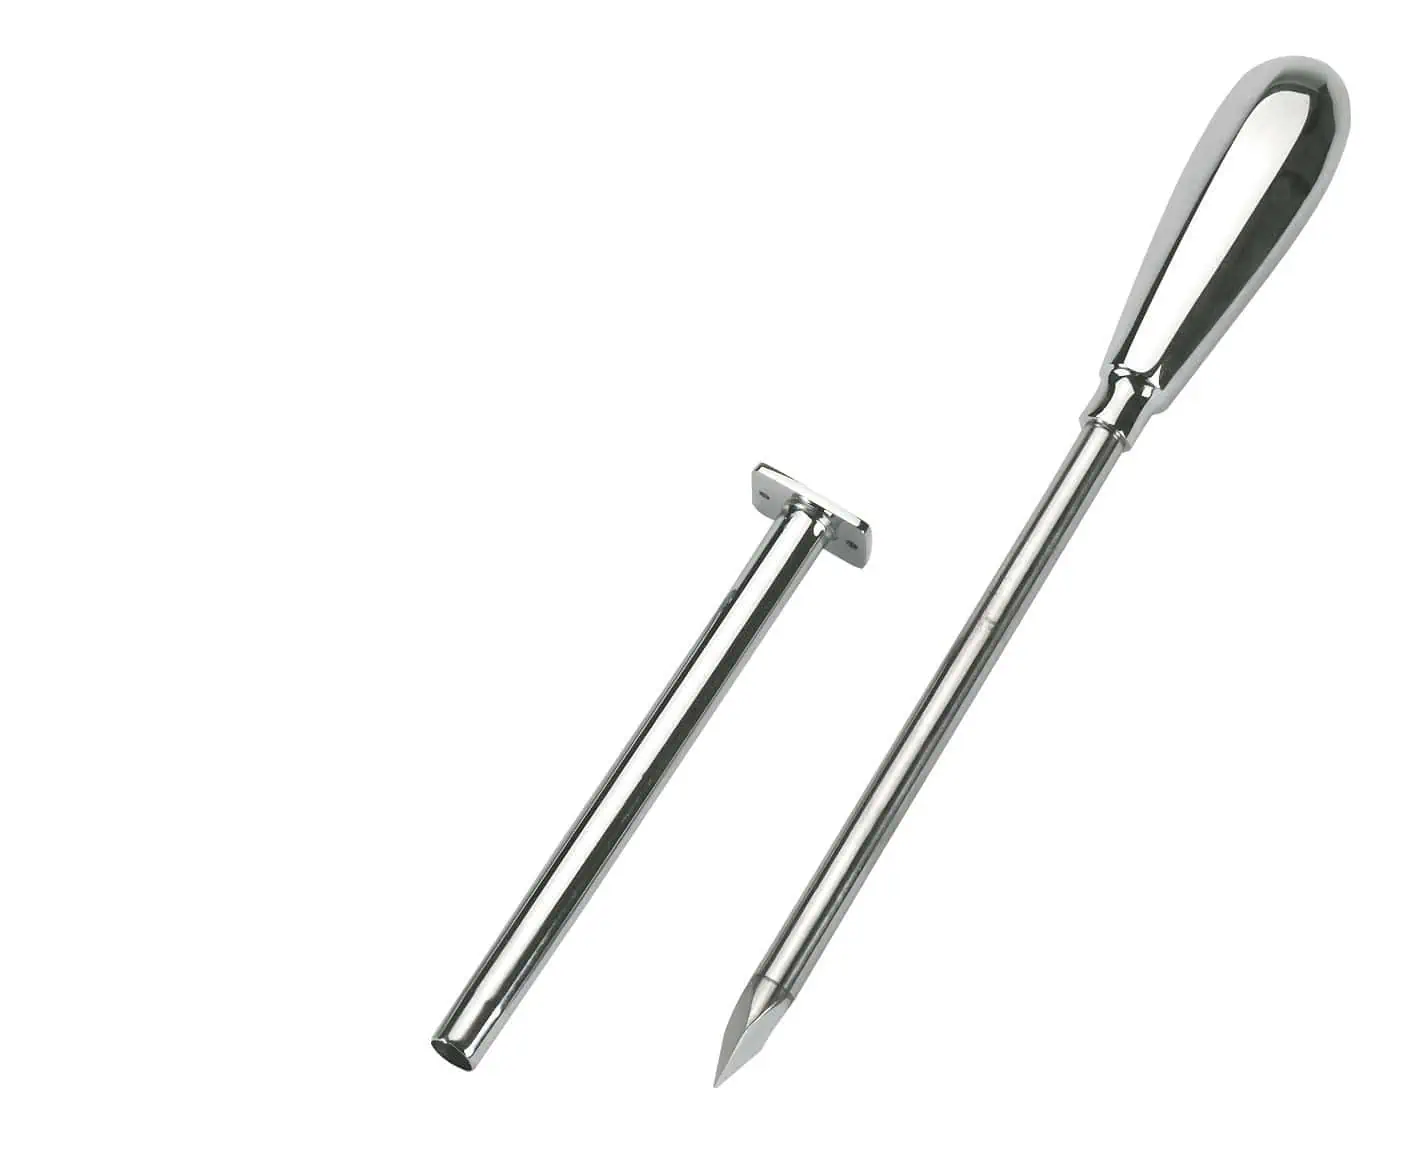 Trocar, 9 cm, Ø 5 mm, metal handle, chrome-plated